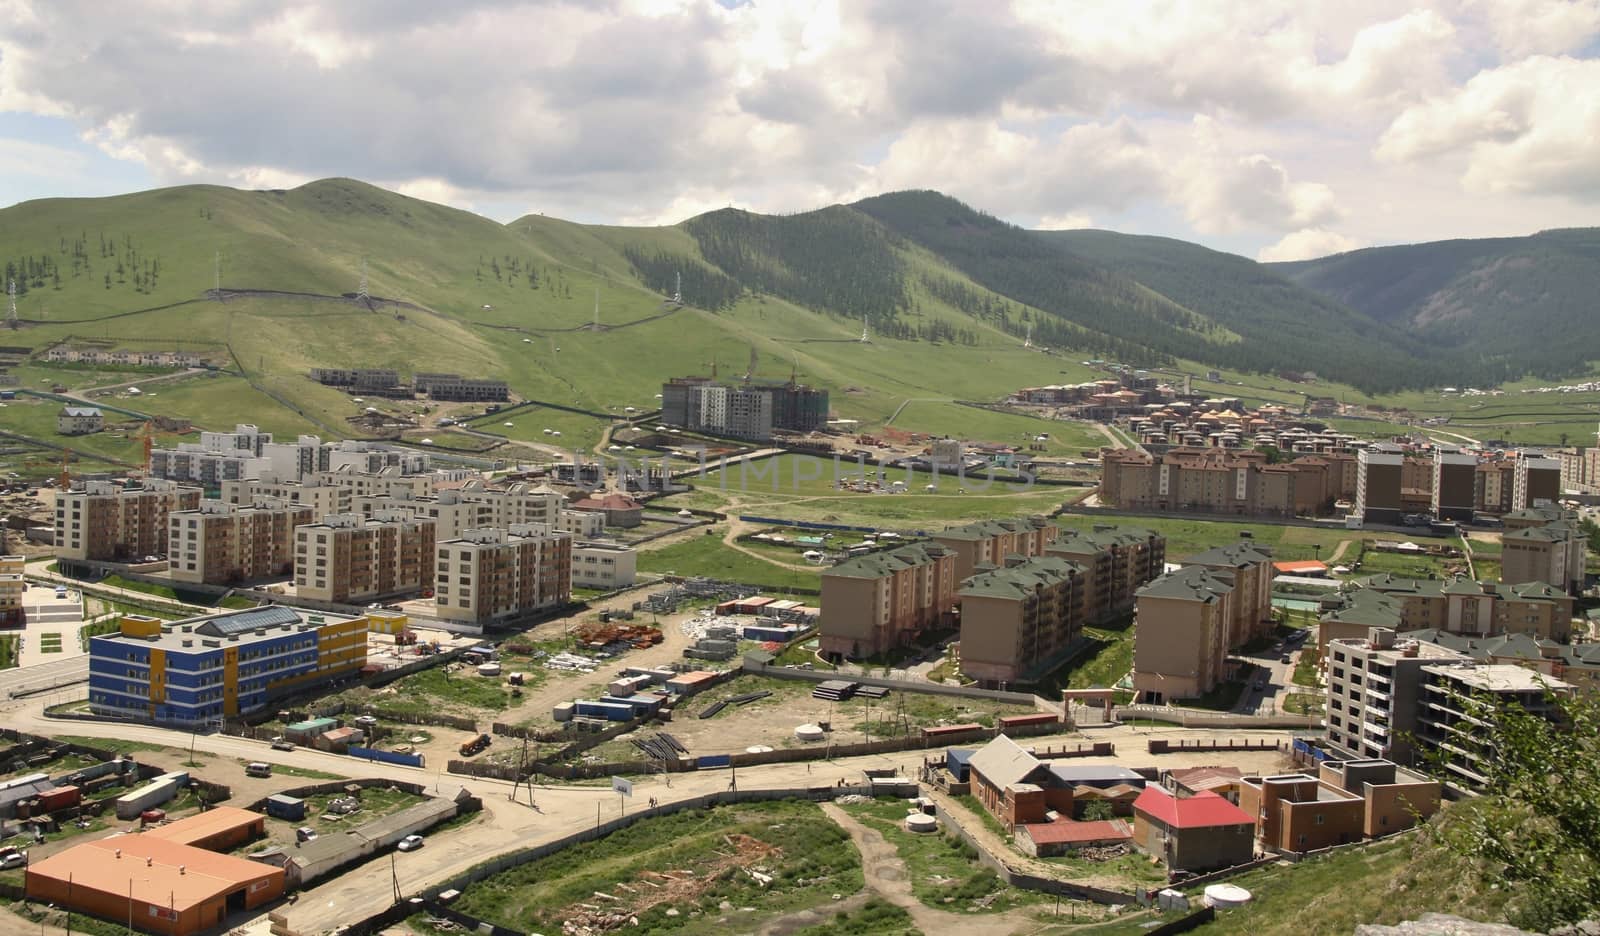 New  buildings in the capital city Ulaanbaatar,Mongolia by jnerad